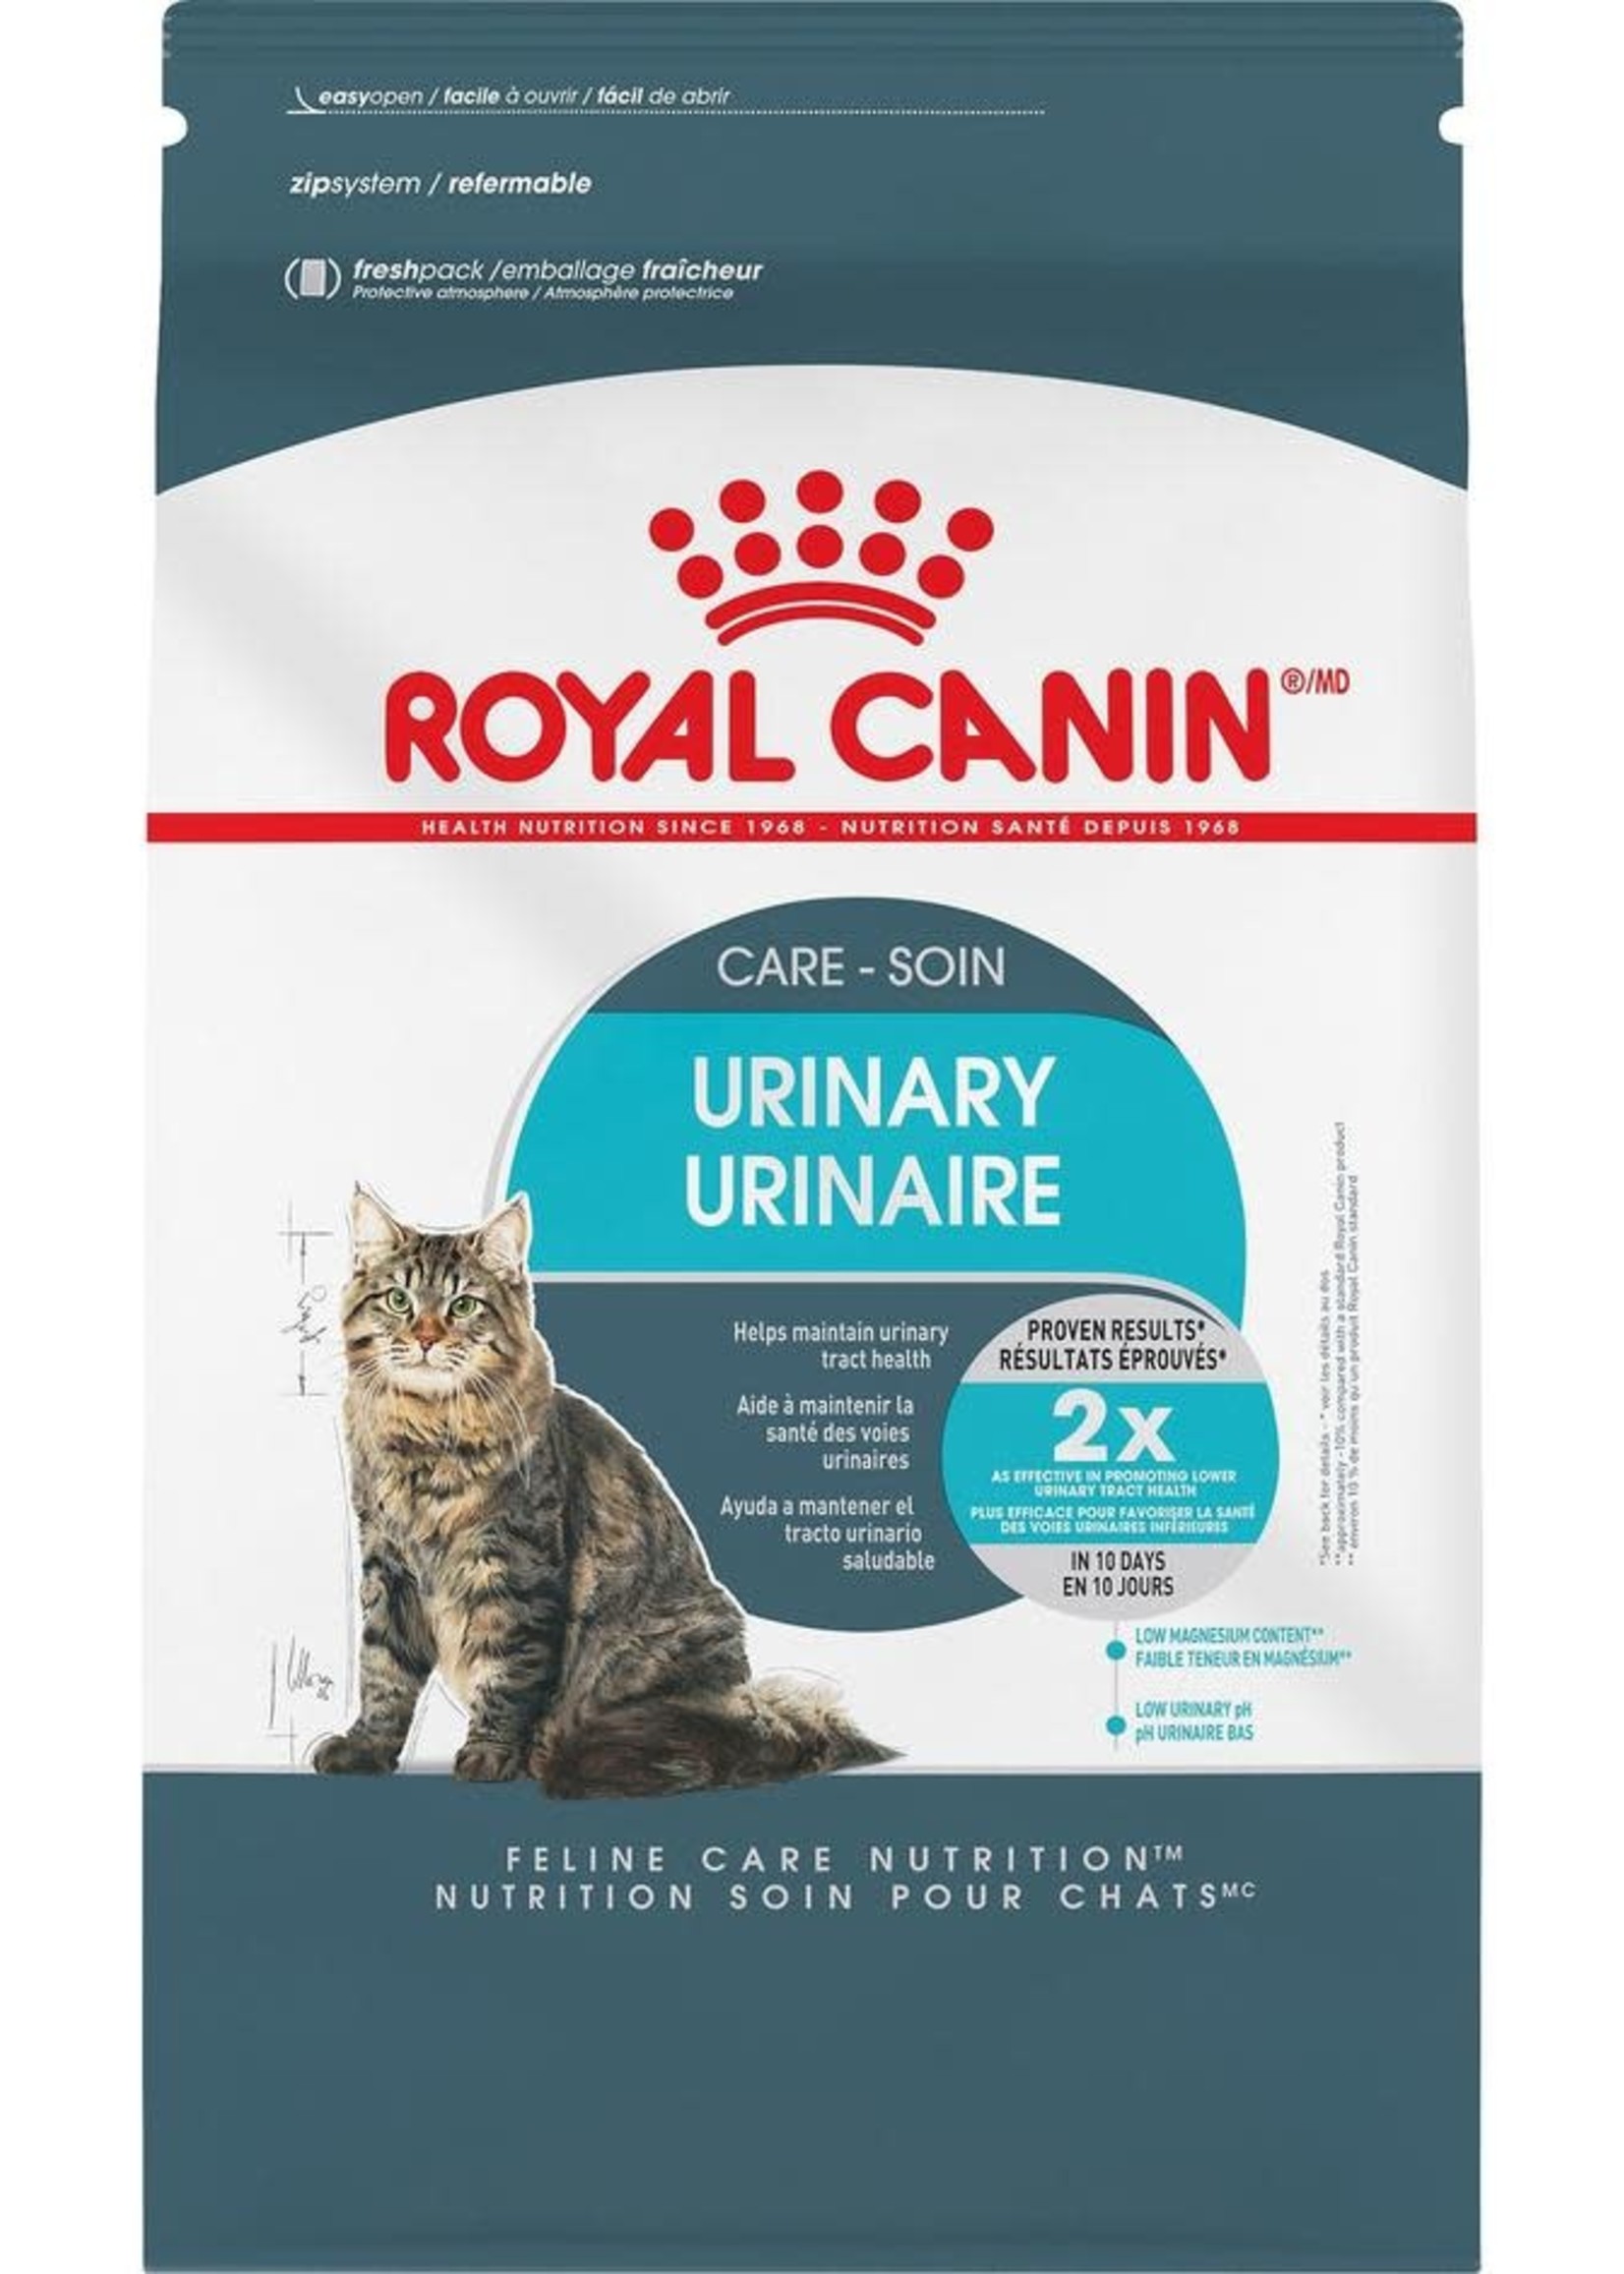 Royal Canin® Royal Canin Cat Urinary Care 6lb